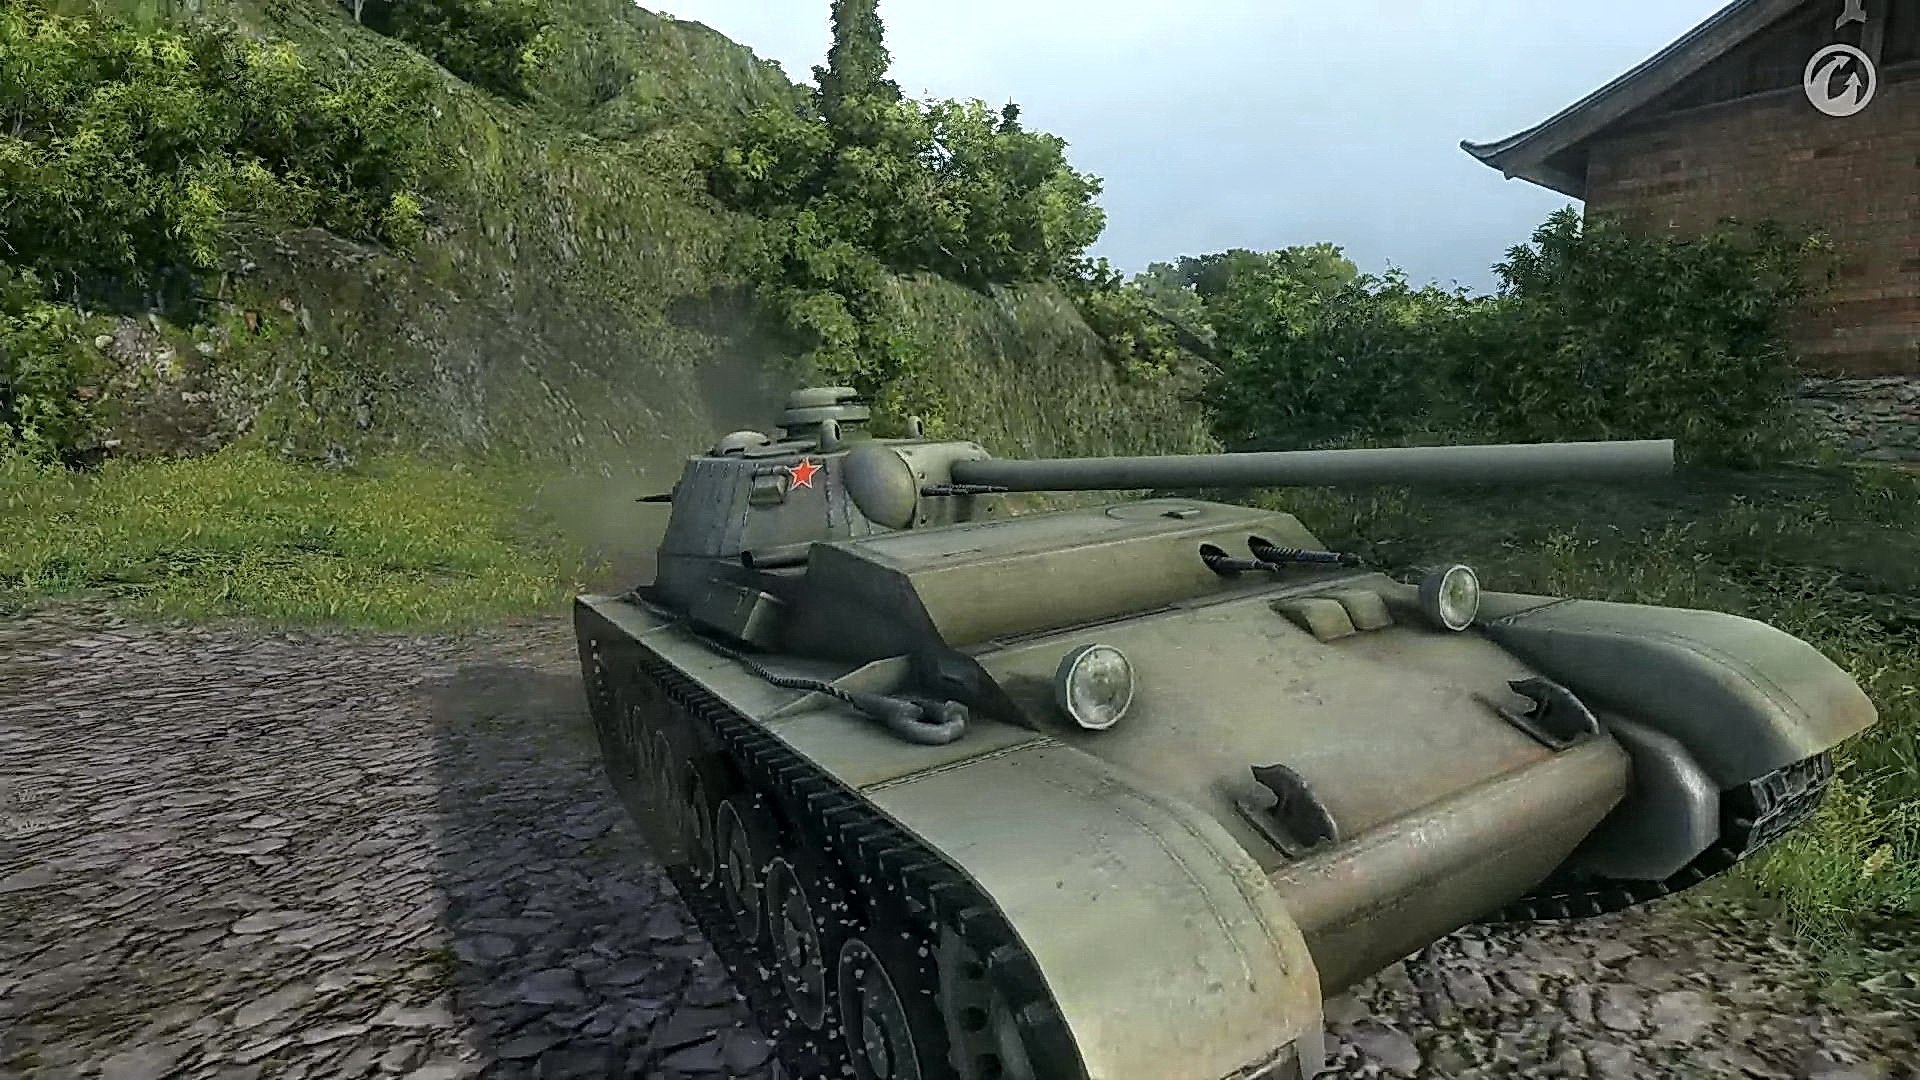 1а 44. Танк 44. А-44 танк WOT. Т44 танк. Советский танк а44.